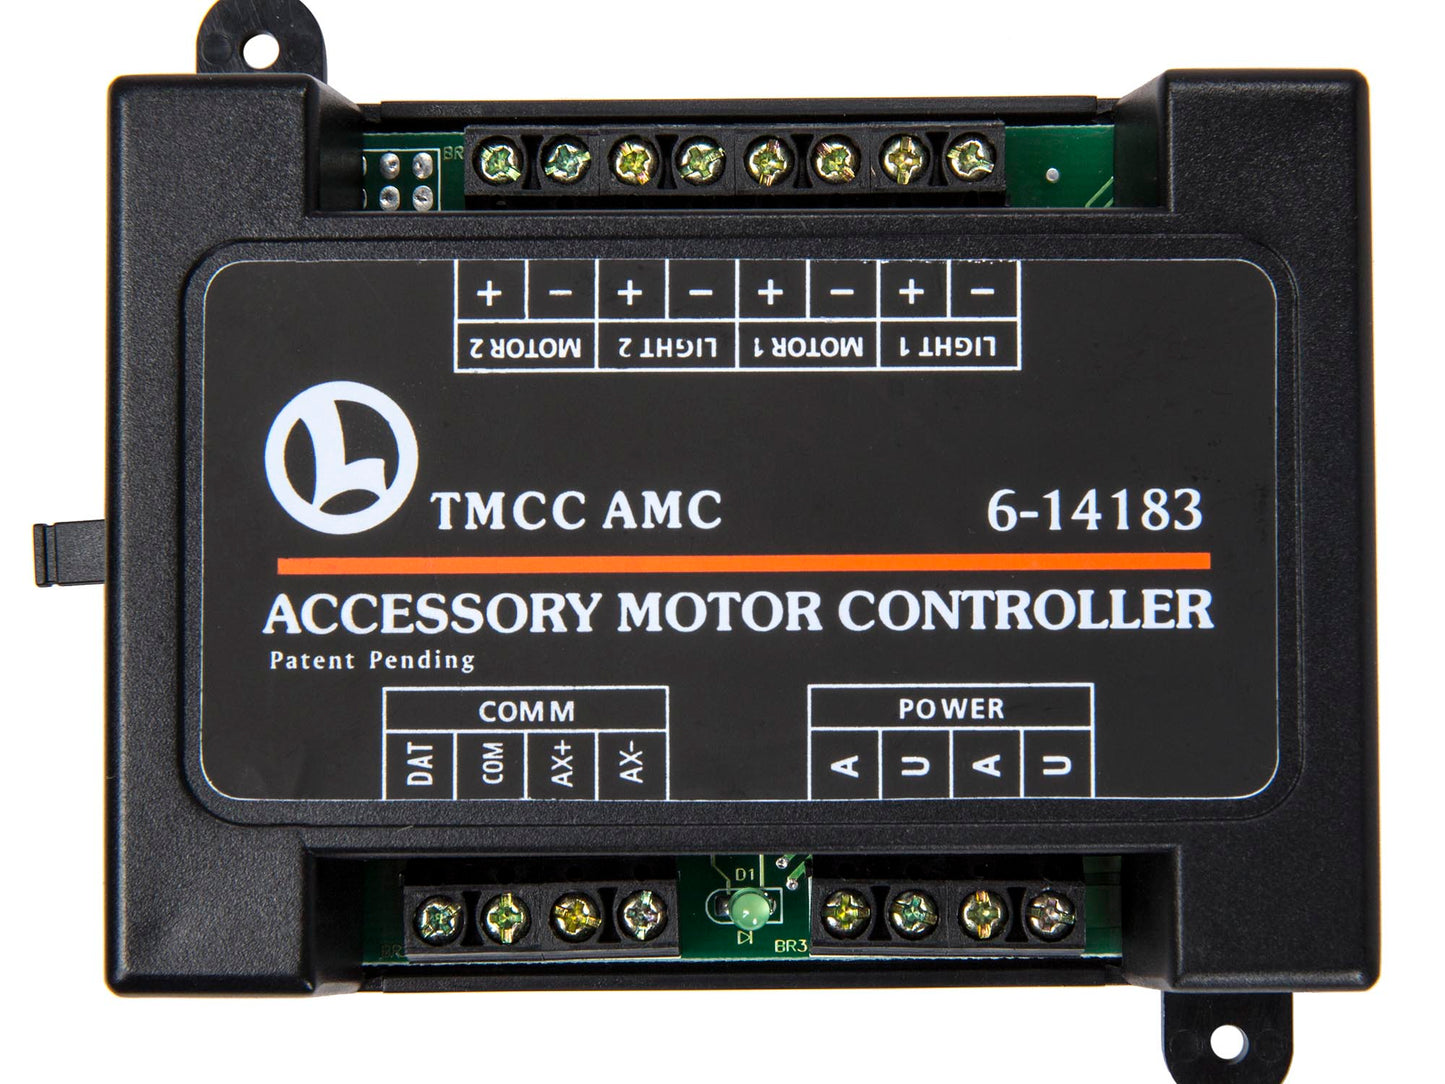 TMCC Accessory Motor Controller (AMC)